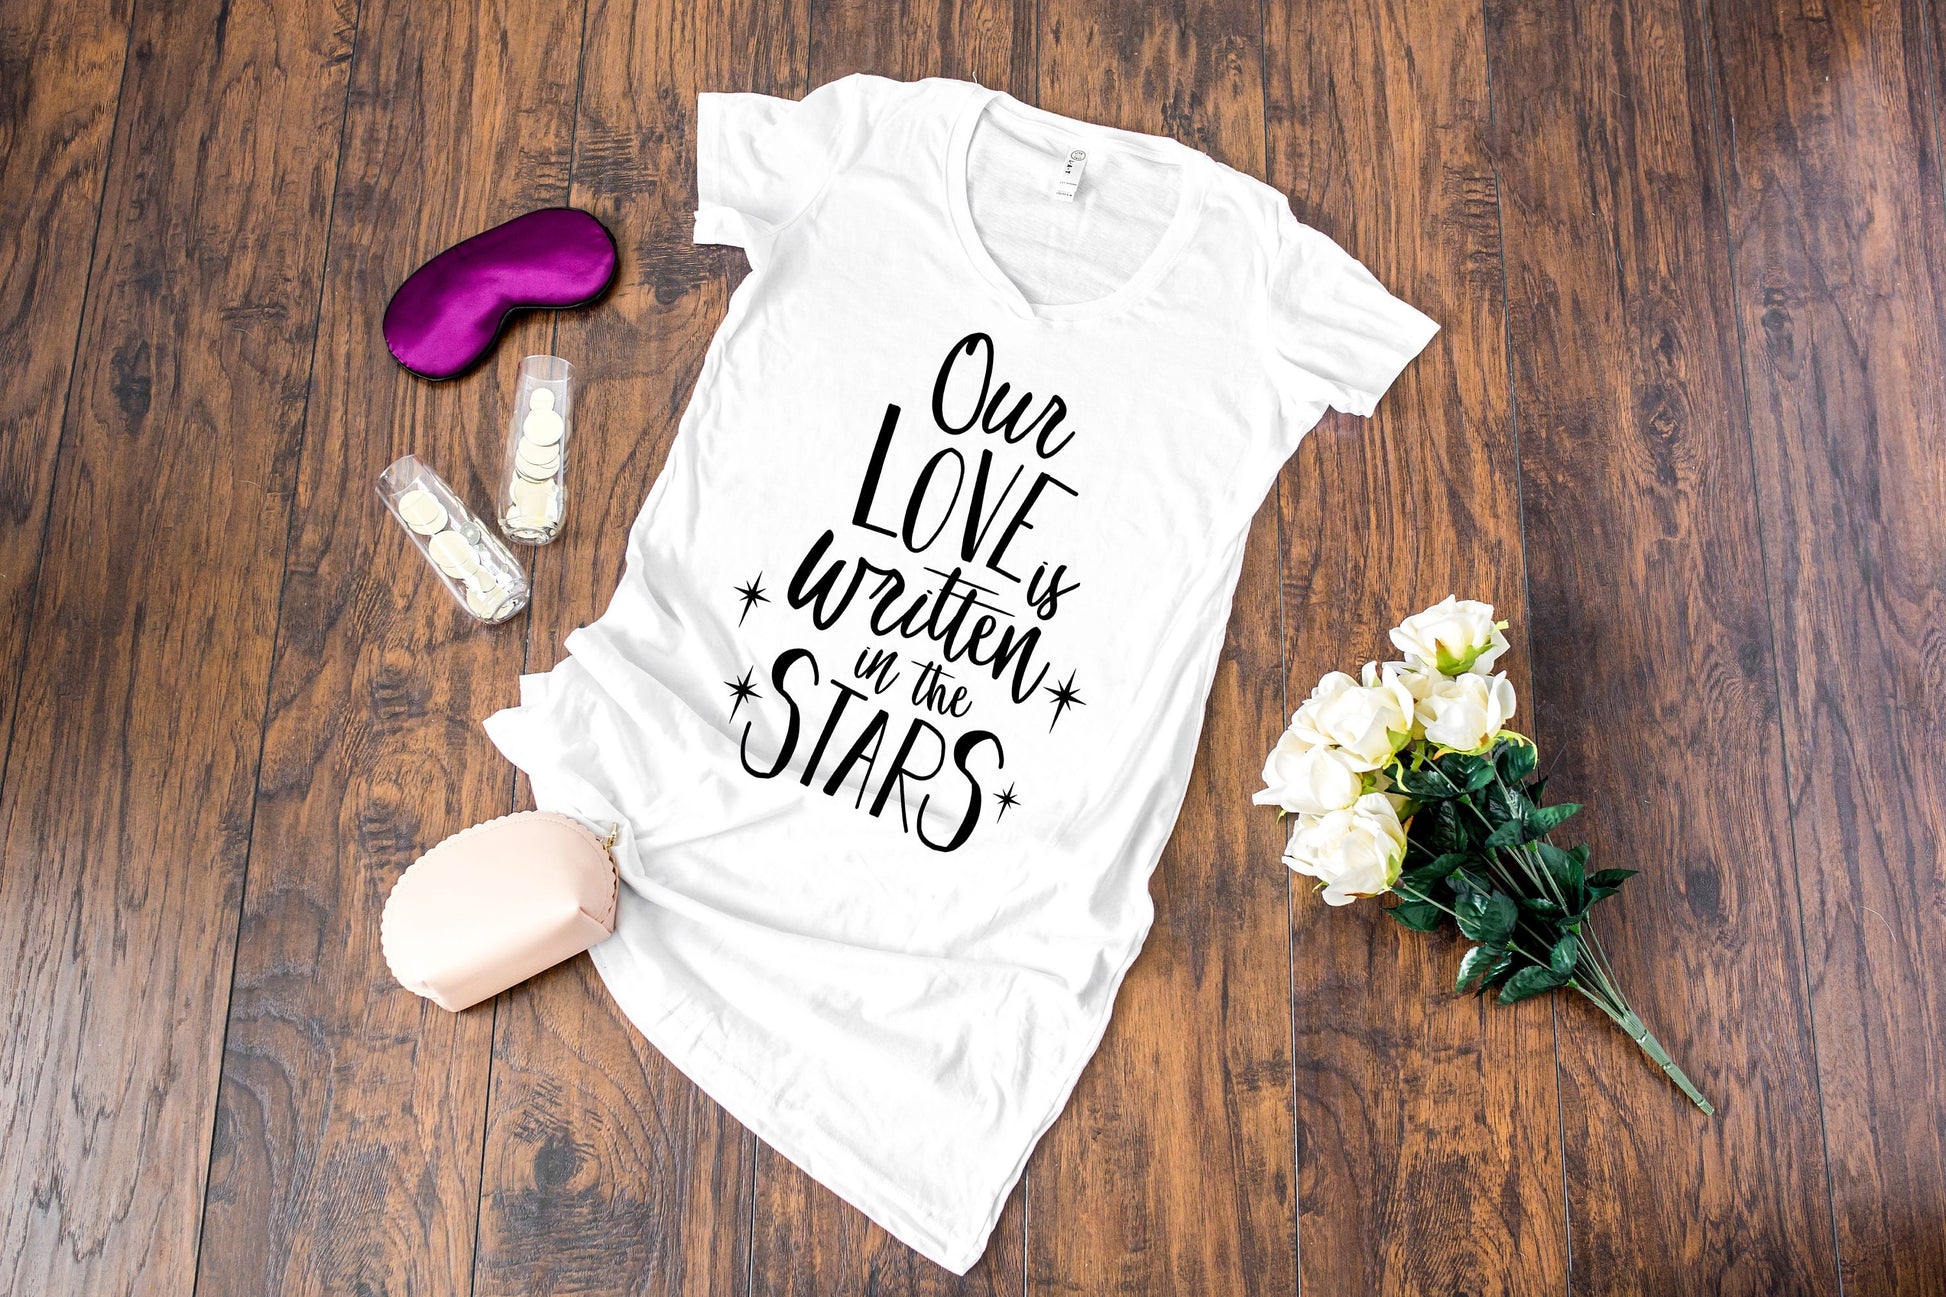 Our Love is Written in the Stars V-neck Night Shirt - nighty - sleep shirt - long night shirt - women's pajamas - lounge shirt